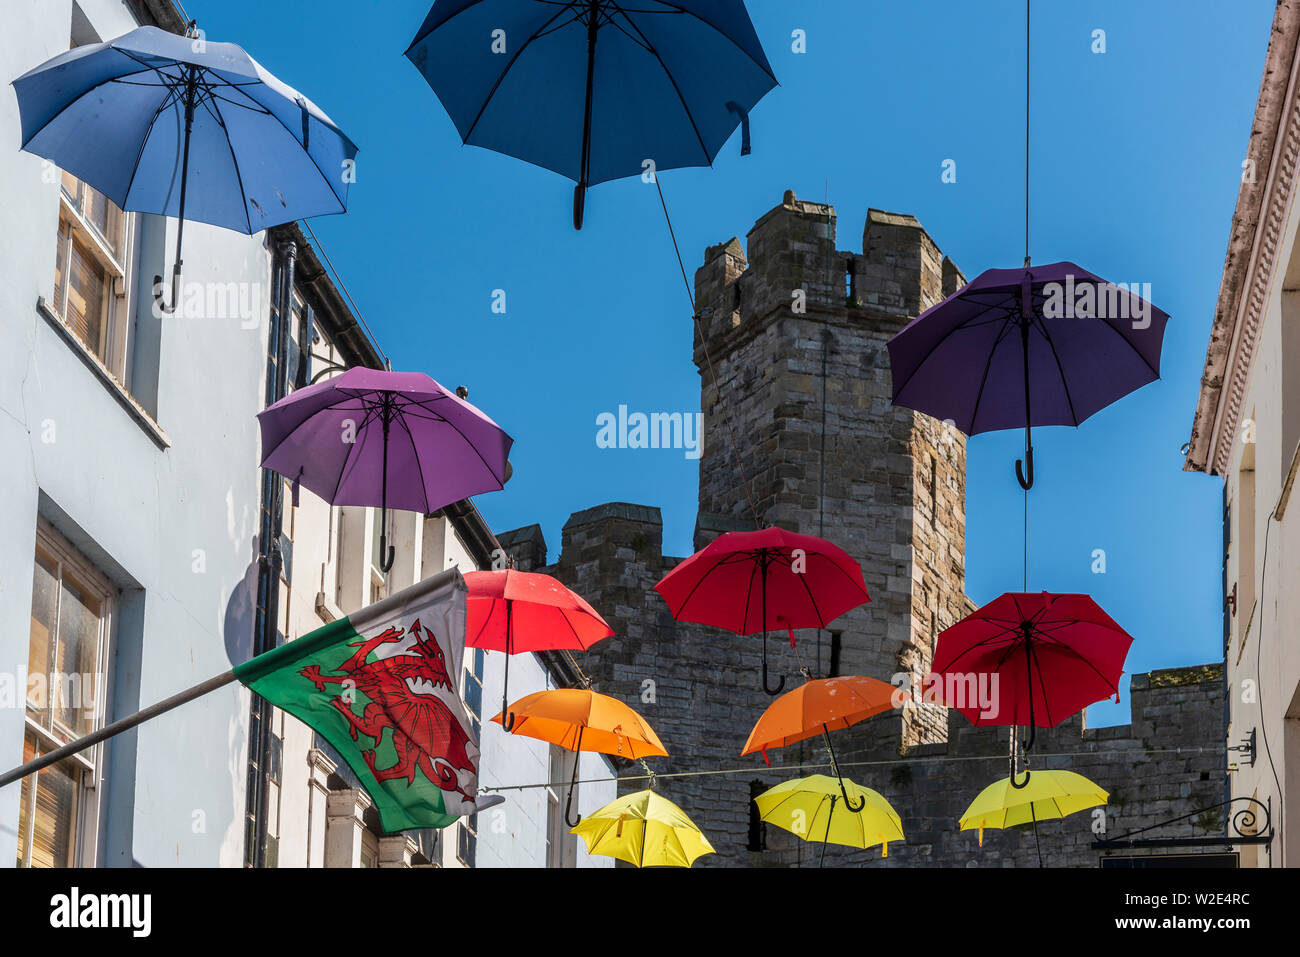 Caernarfon. North Wales. Flying umbrellas in street art. Palace Street. Stock Photo